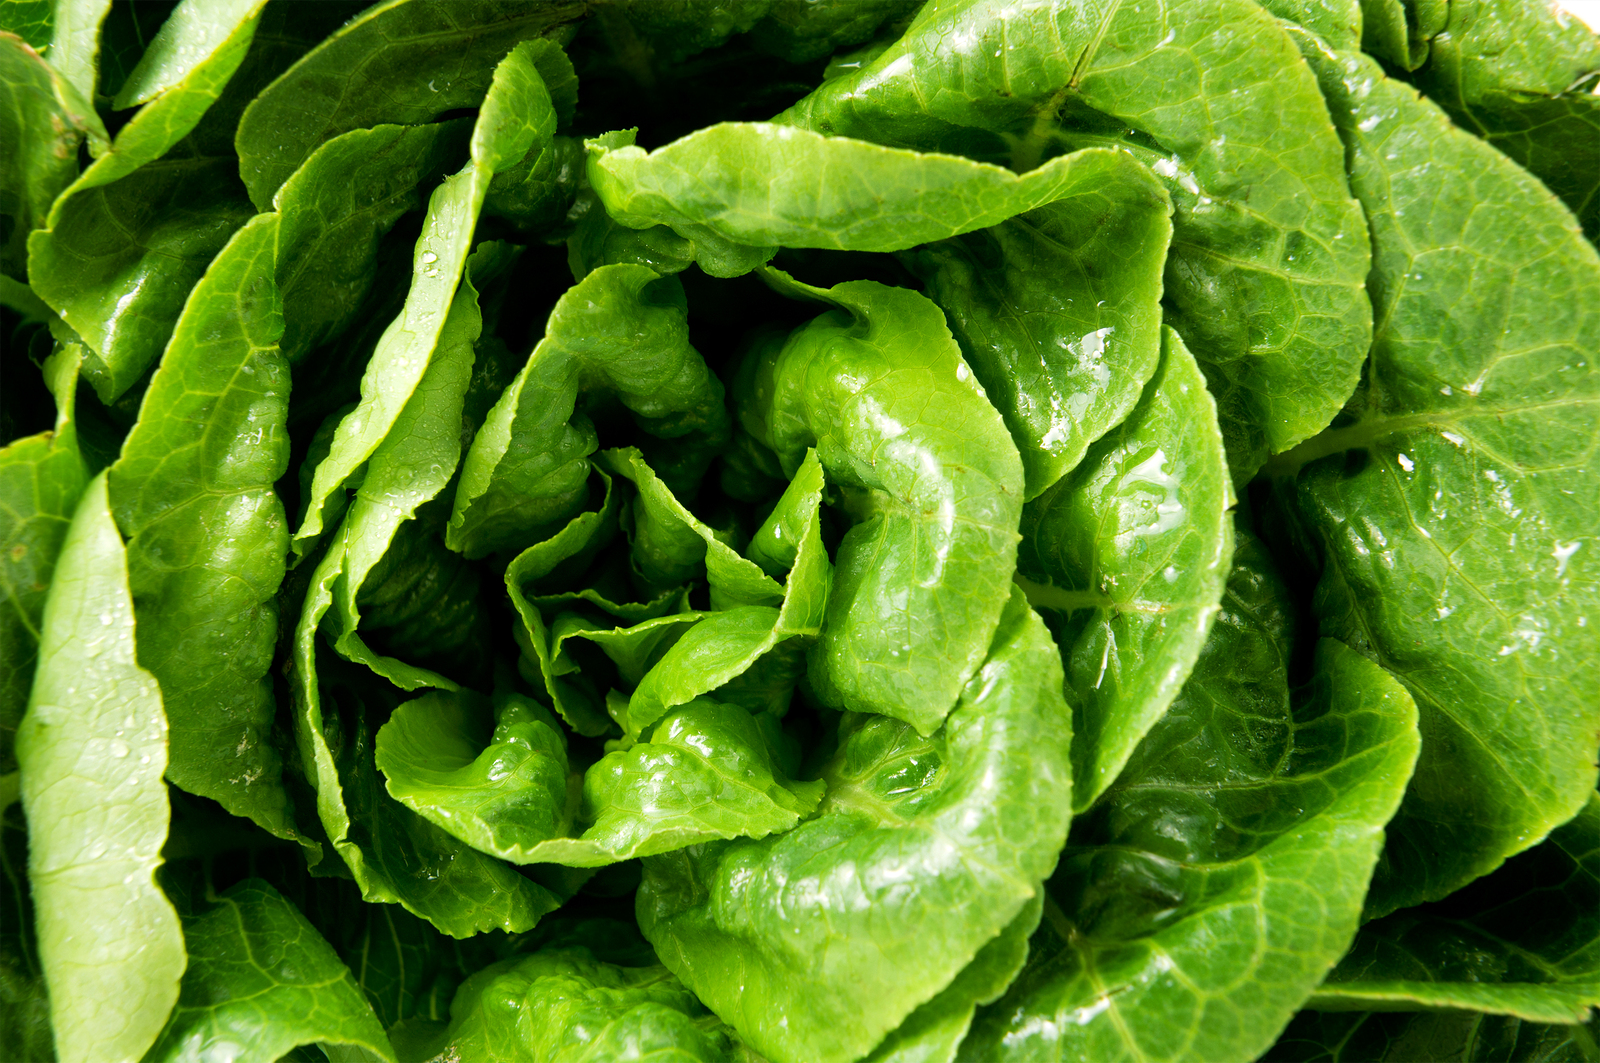 Fresh green lettuce salad leaves closeup. Vegetable salad lettuce.